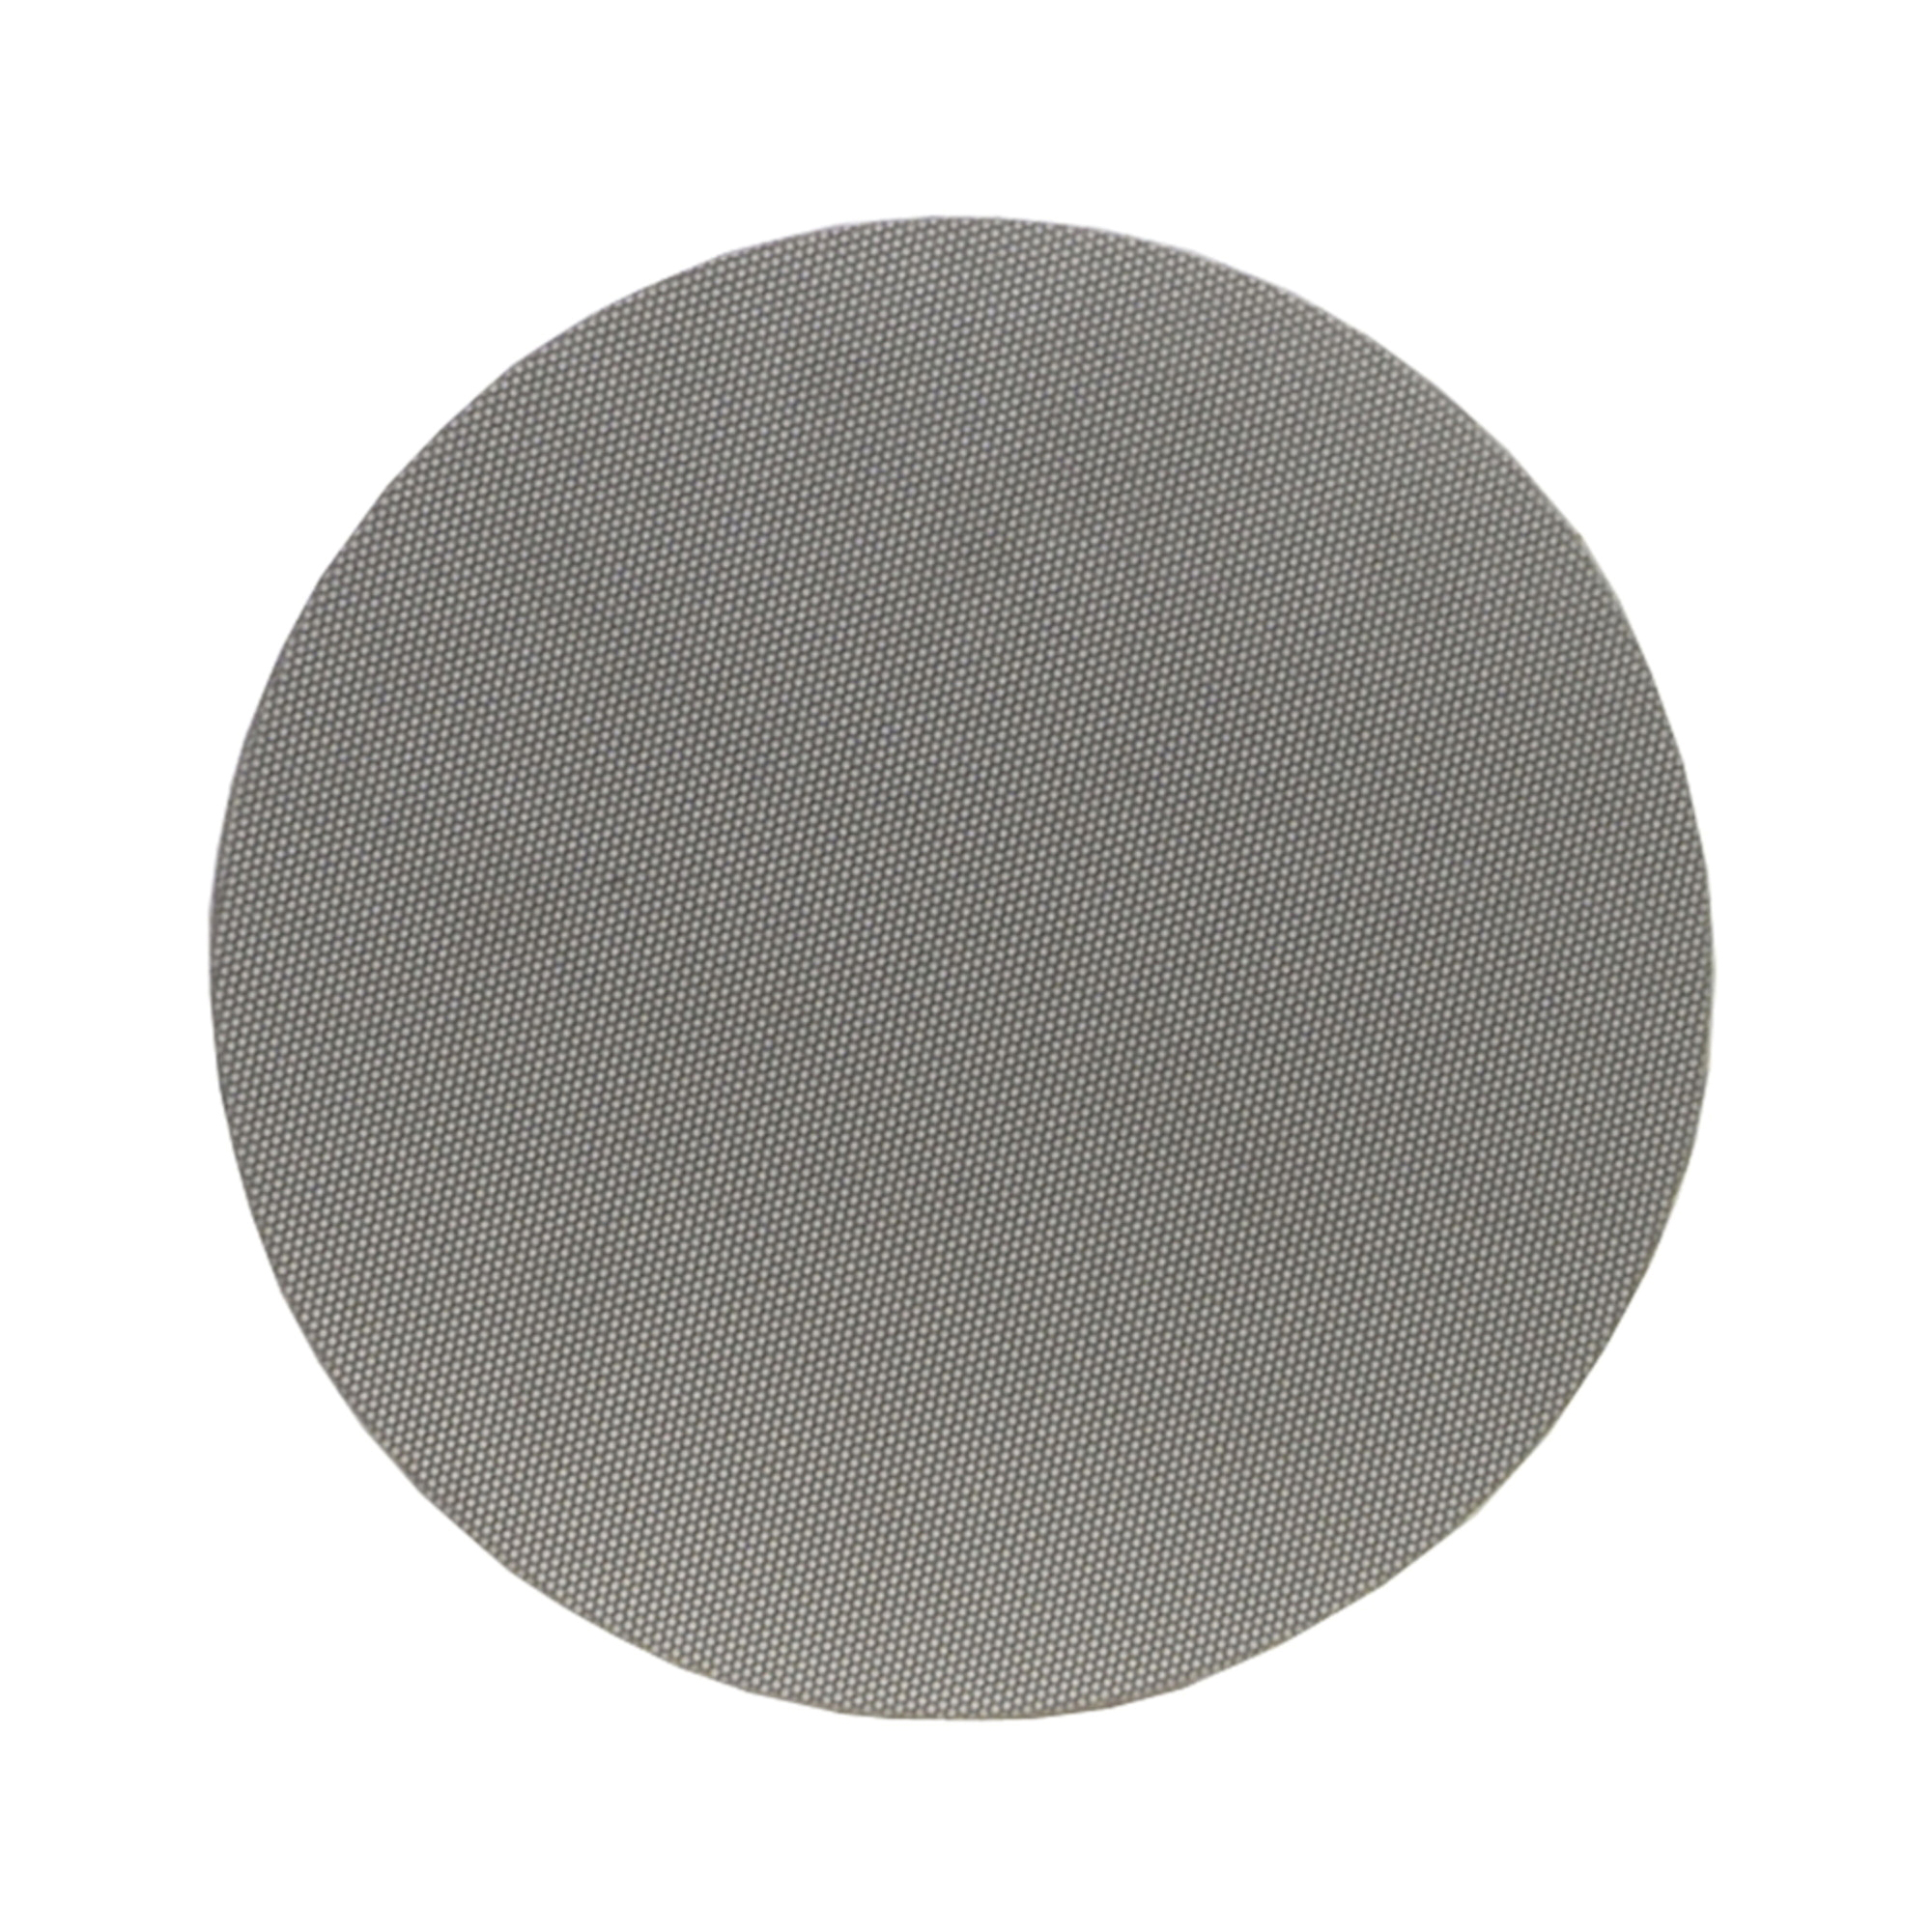 Norton® 66260307839 D71S Flexible Coated Abrasive Disc, 5 in Dia, 60 Grit, Coarse Grade, Diamond Abrasive